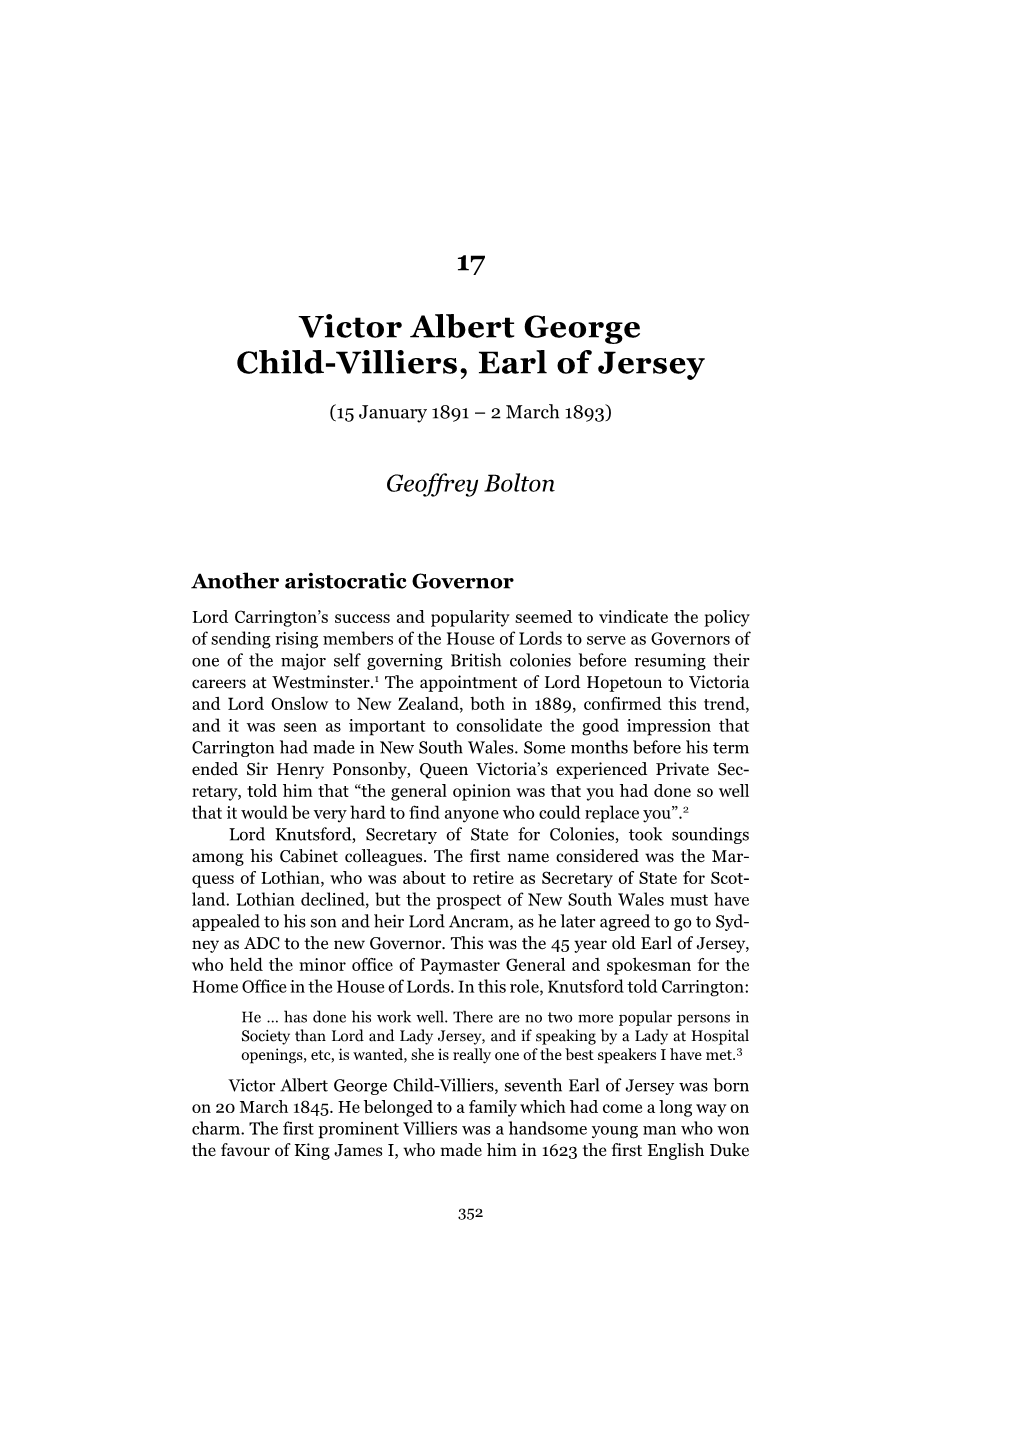 Victor Albert George Child-Villiers, Earl of Jersey